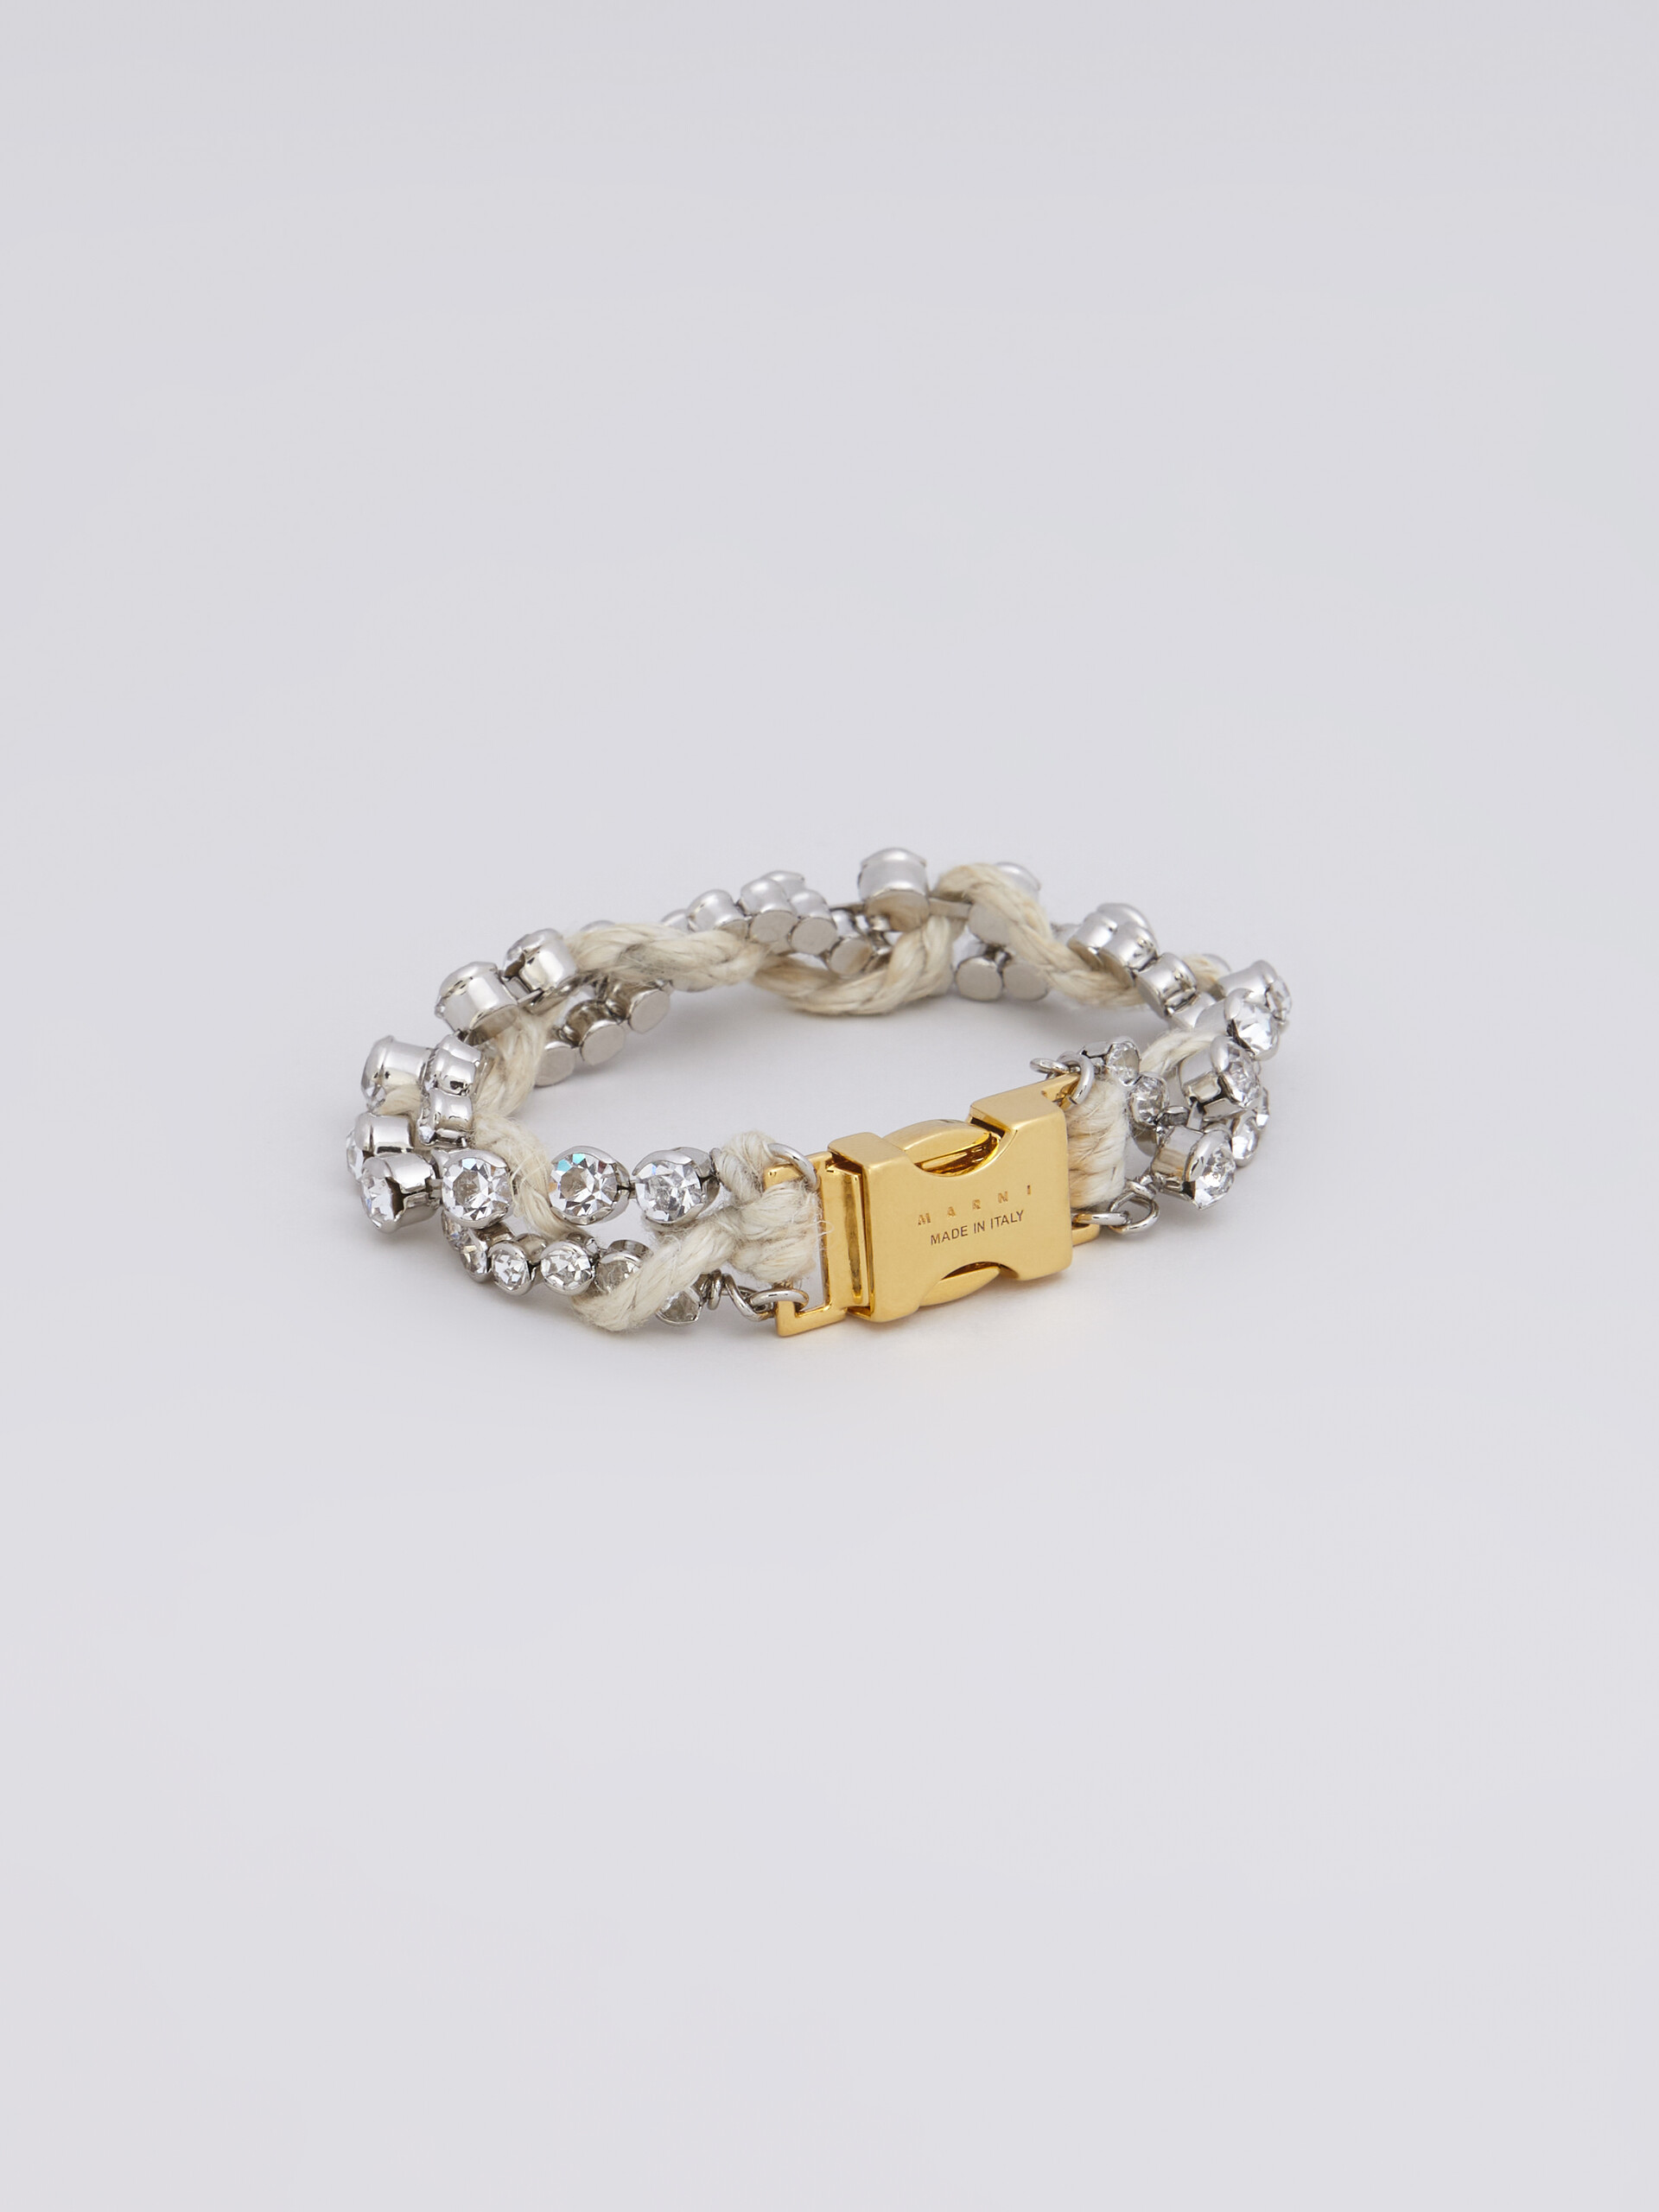 Brass and strass FOUND TREASURES bracelet - Bracelets - Image 3